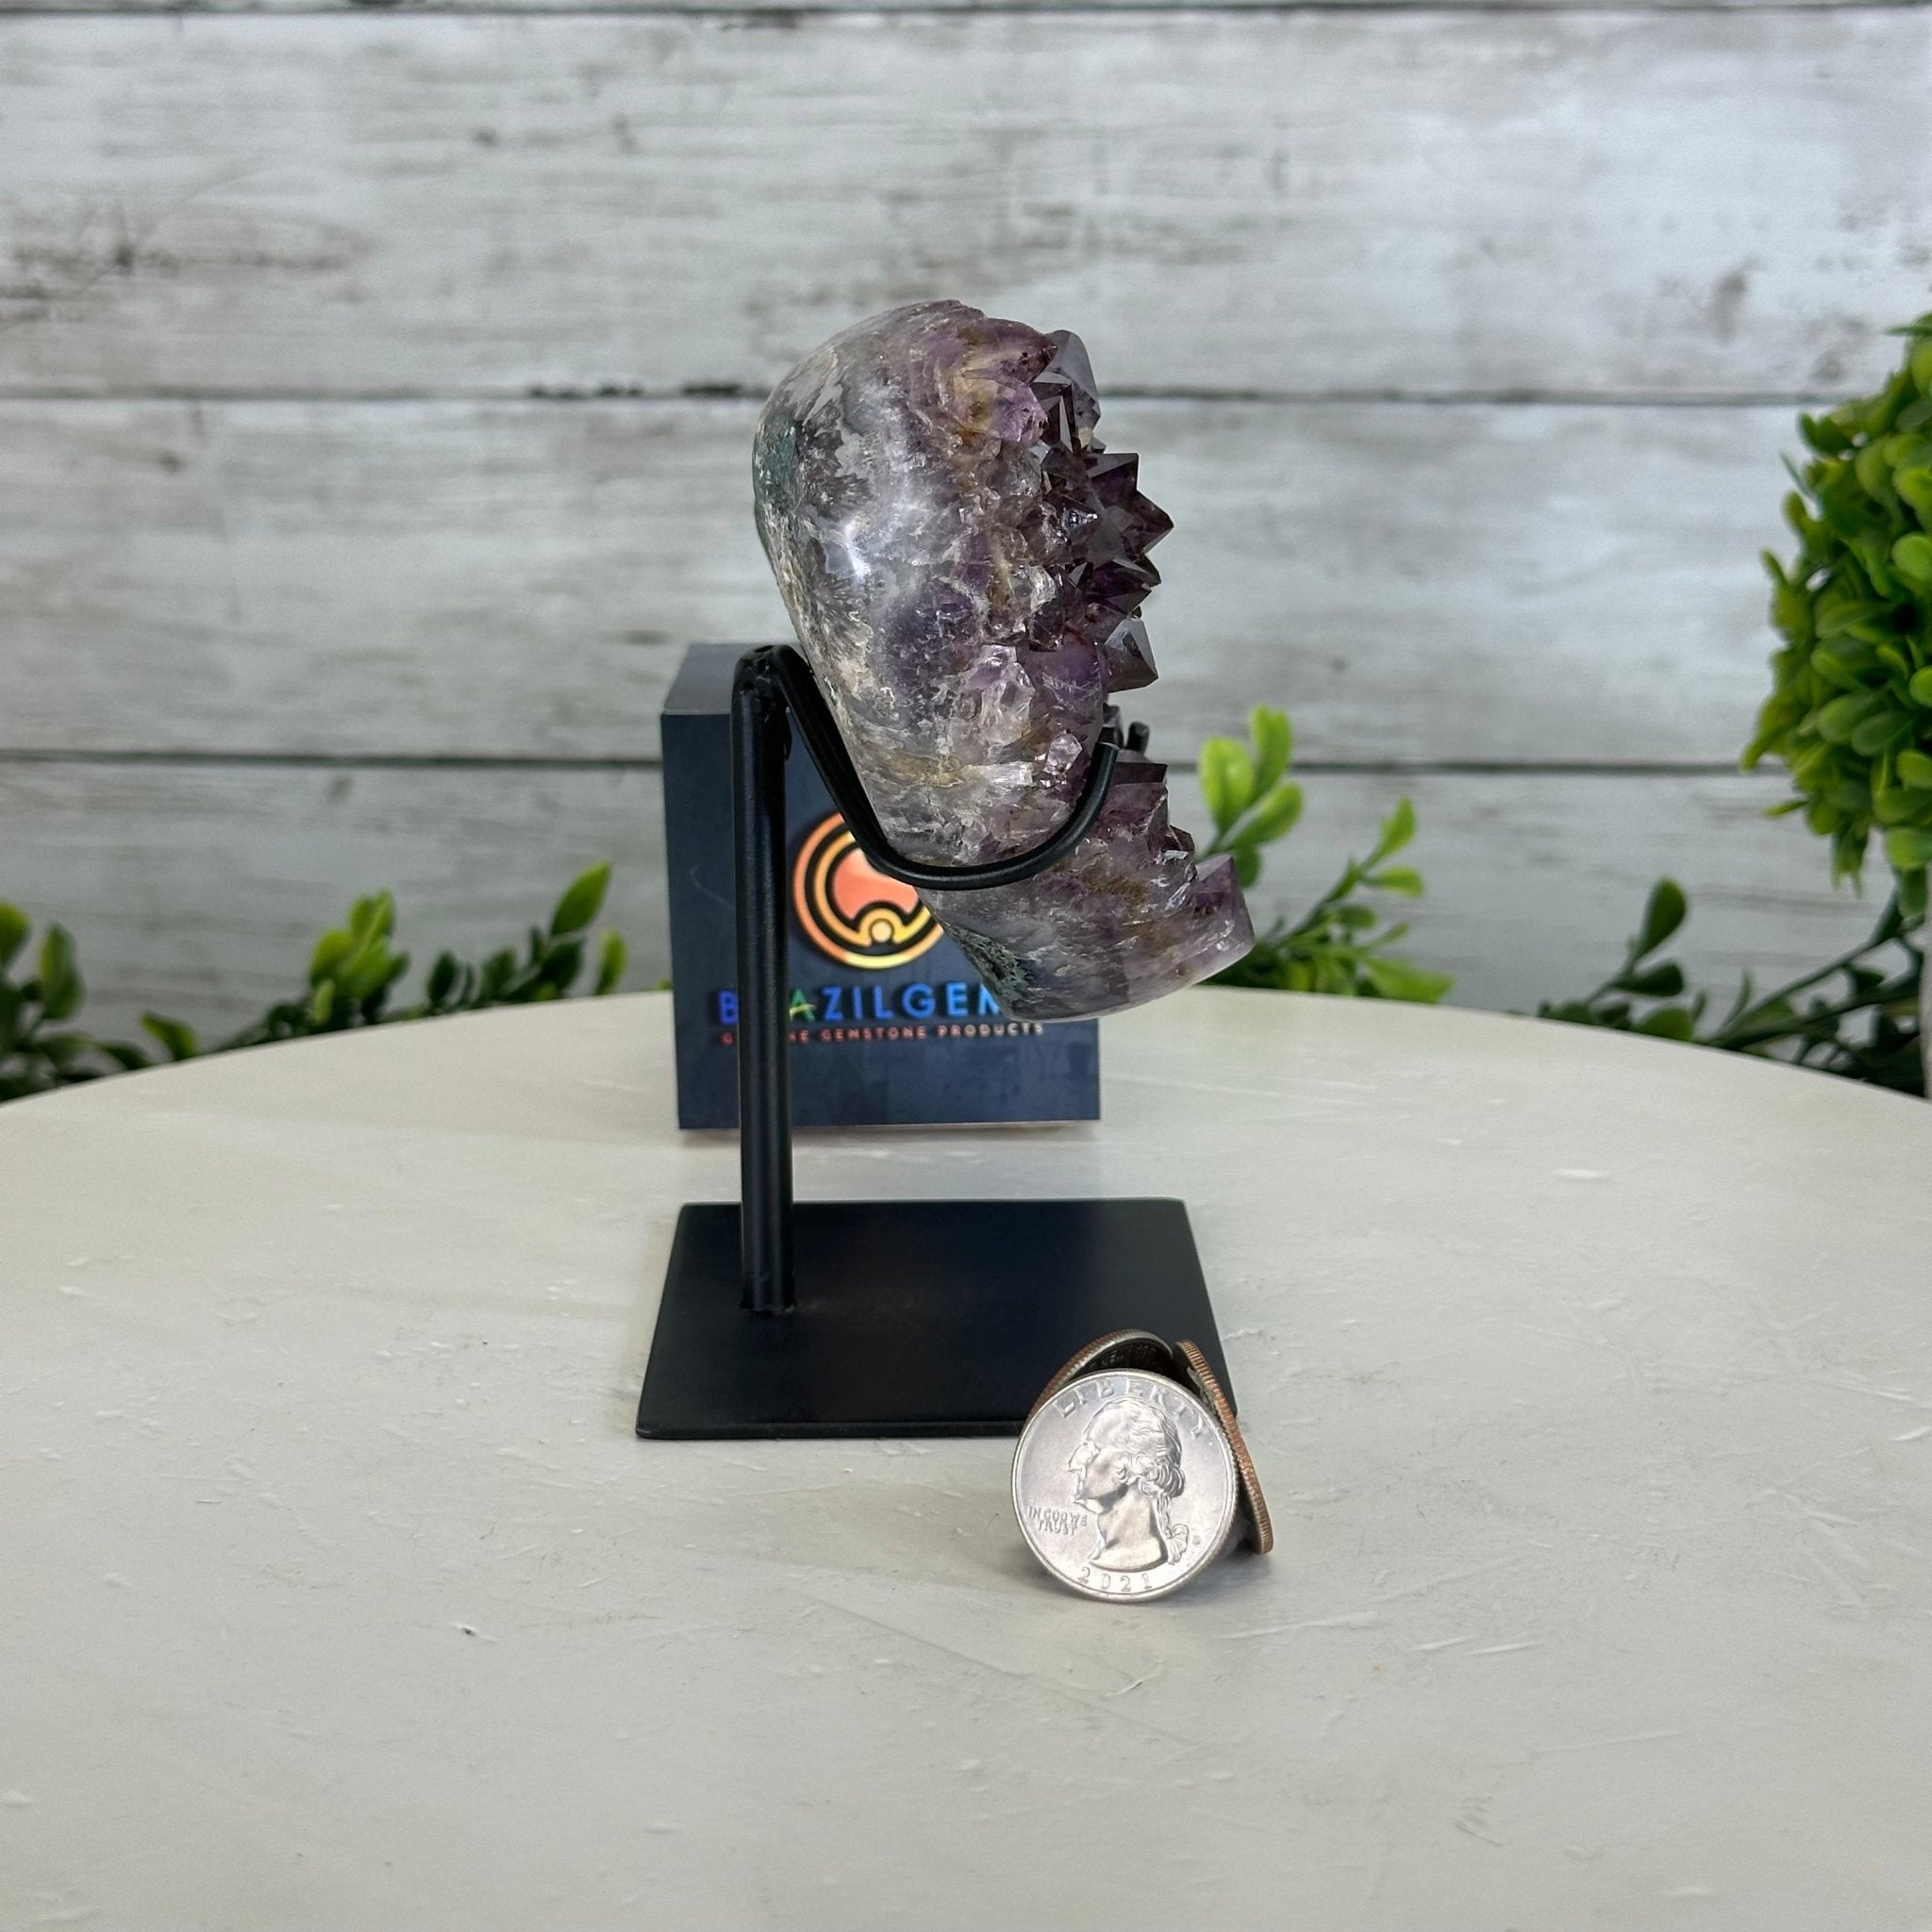 Amethyst Heart Geode w/ metal stand, 1.6 lbs & 5.1" Tall #5463-0303 - Brazil GemsBrazil GemsAmethyst Heart Geode w/ metal stand, 1.6 lbs & 5.1" Tall #5463-0303Hearts5463-0303